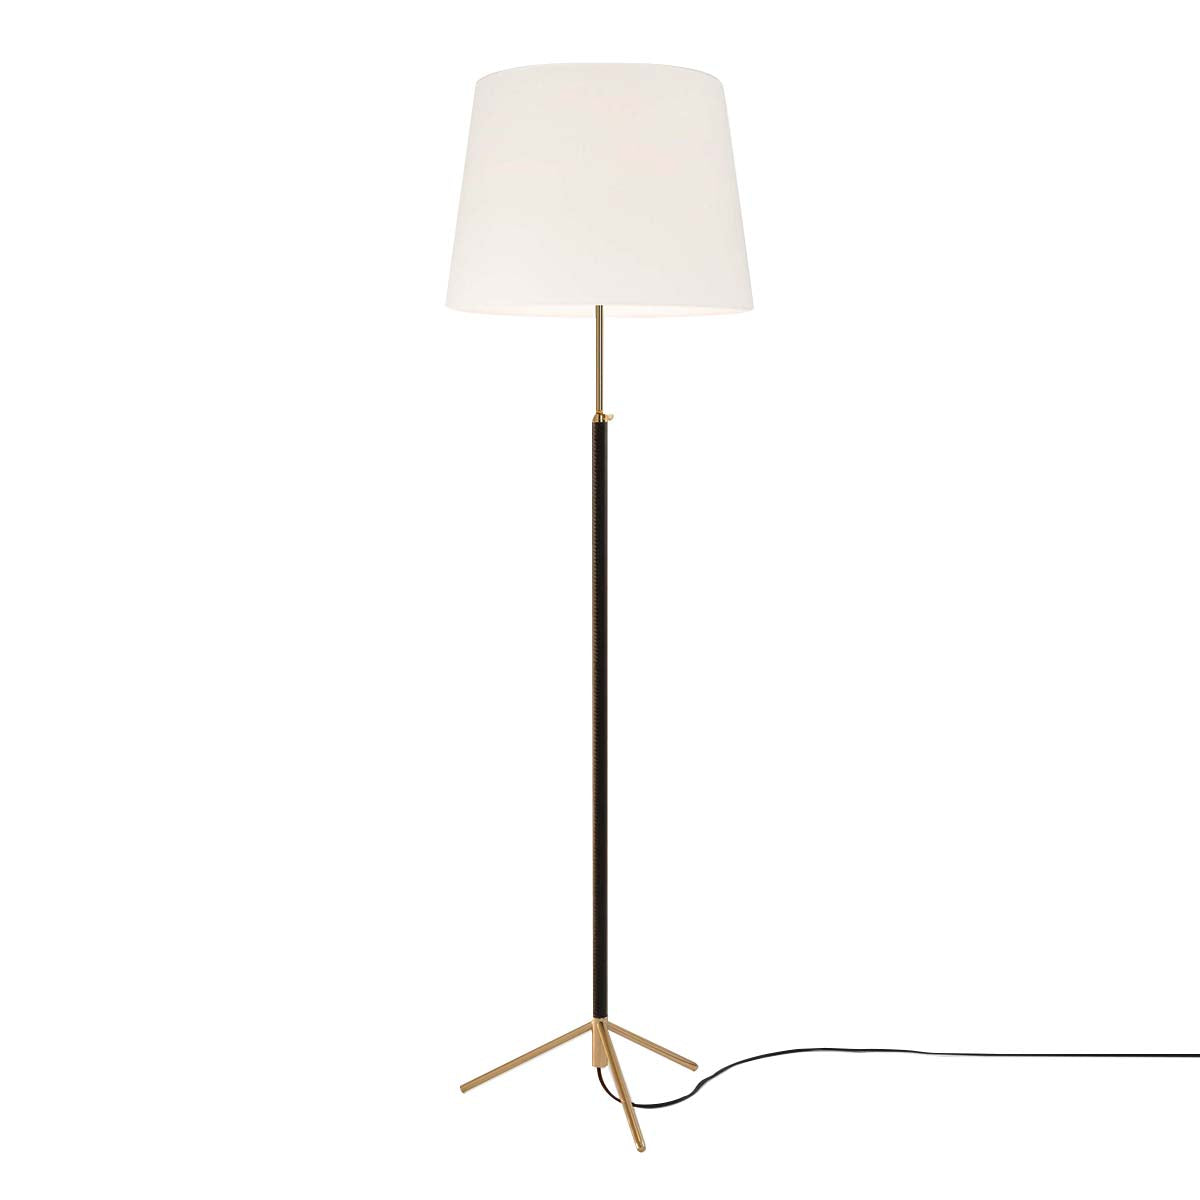 Pie de Salón Floor Lamp: G1 + Polished Brass + White Linen